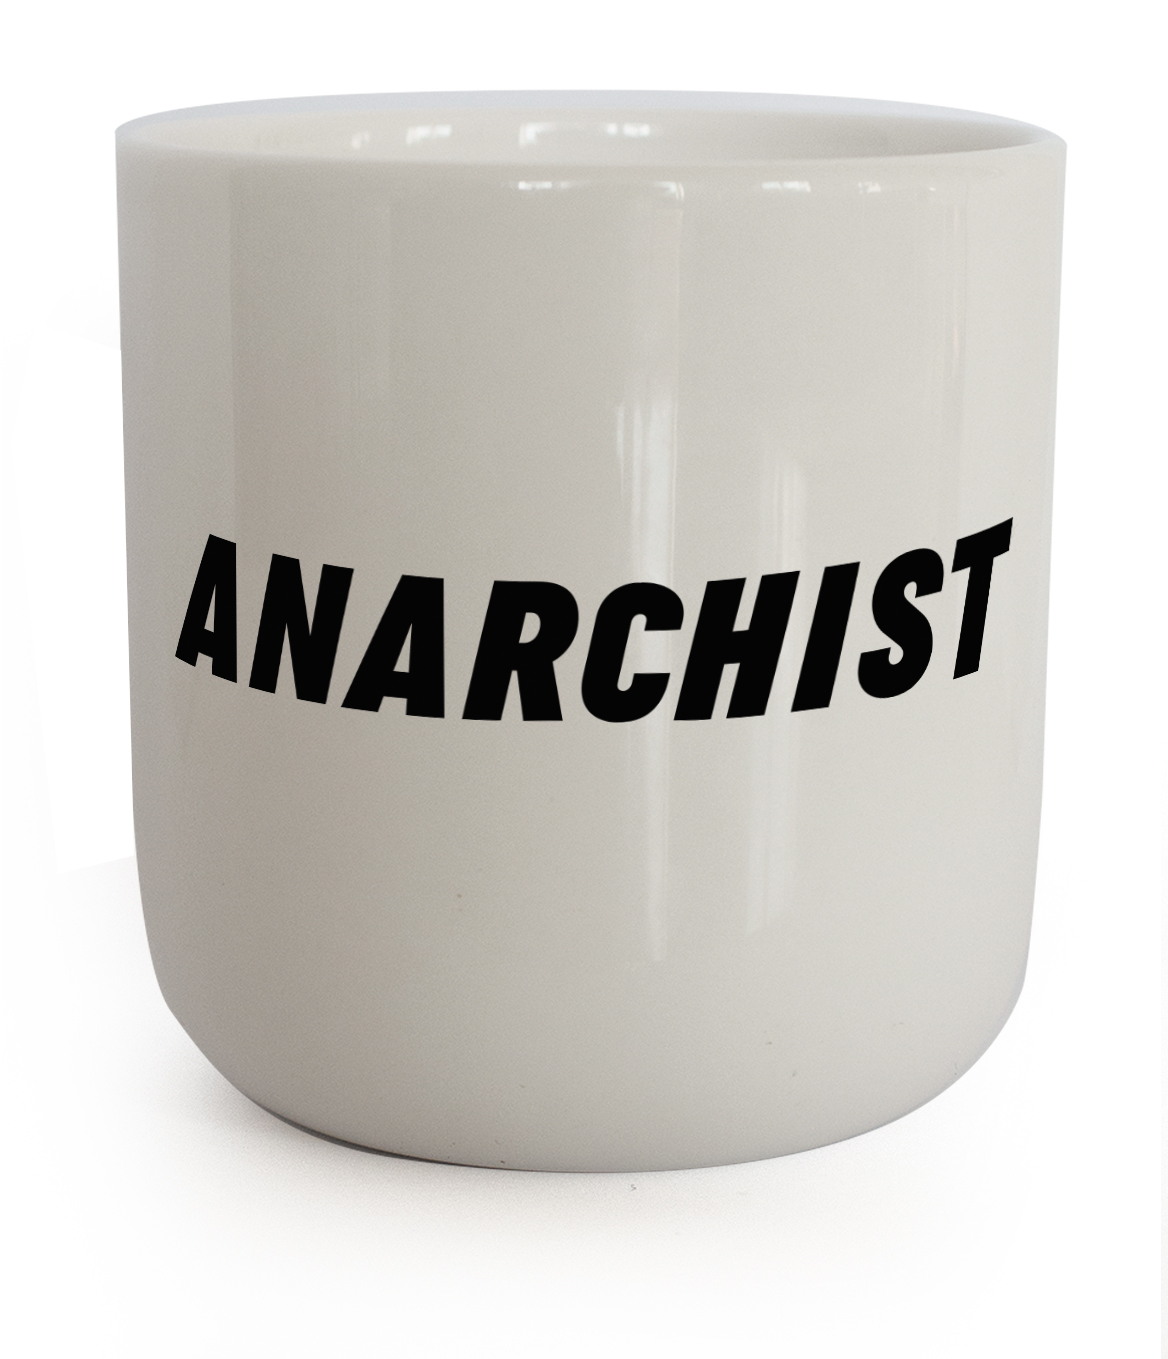 PLTY Anarchist Mug